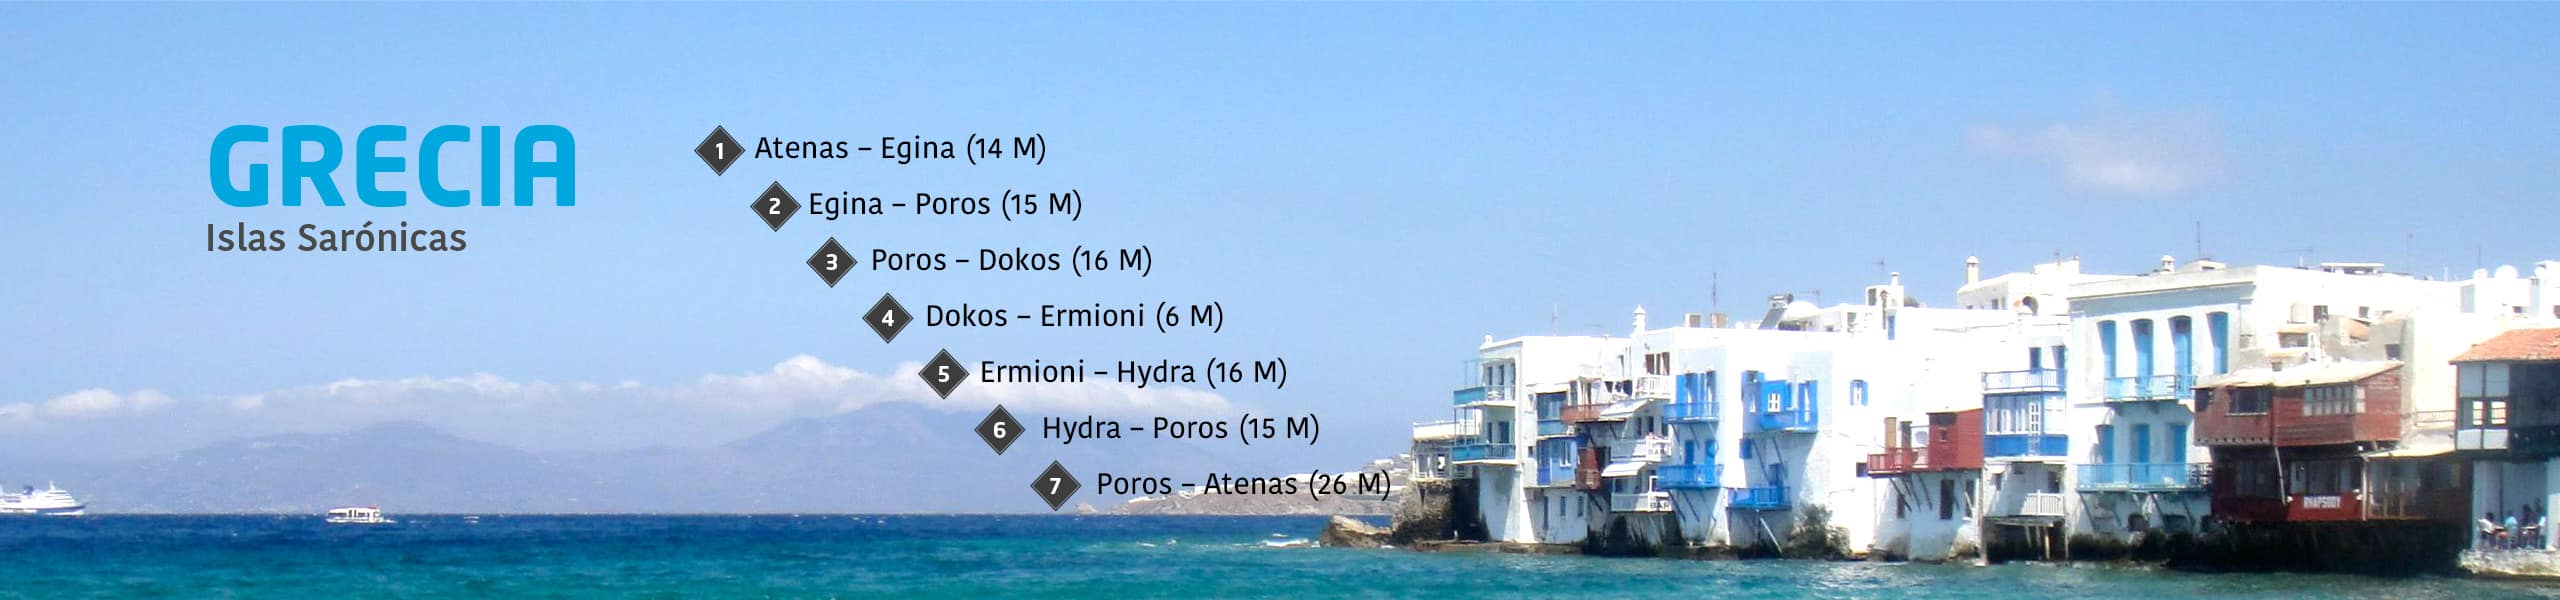 Viaje velero Grecia